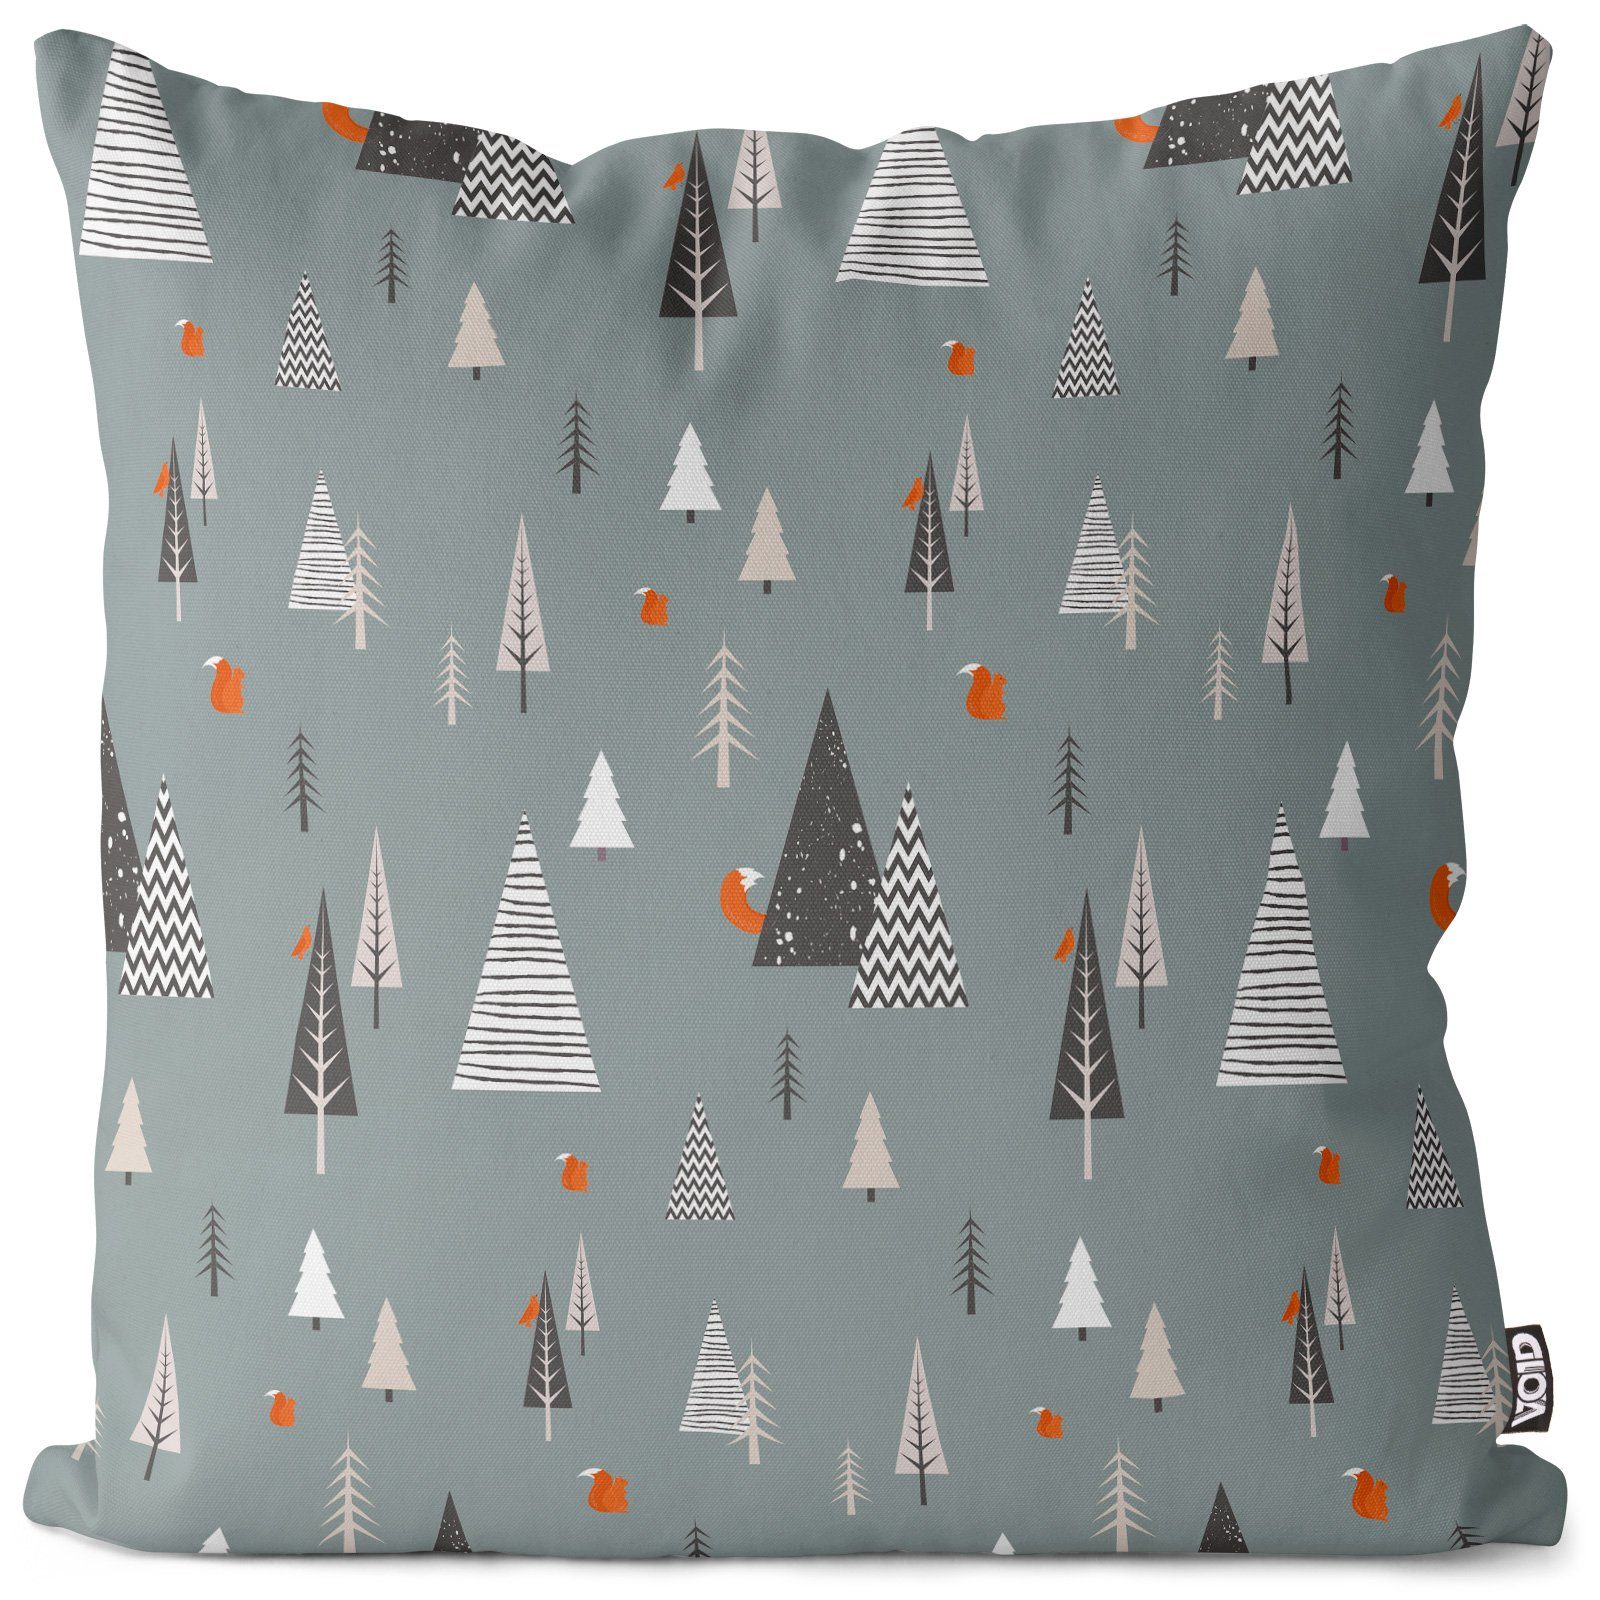 Kissenbezug, VOID (1 Stück), Sofa-Kissen Wald Eichhörnchen Kissenbezug Skandinavien Design Norwegen Wald Bäume Winter So Weihnachten Deko